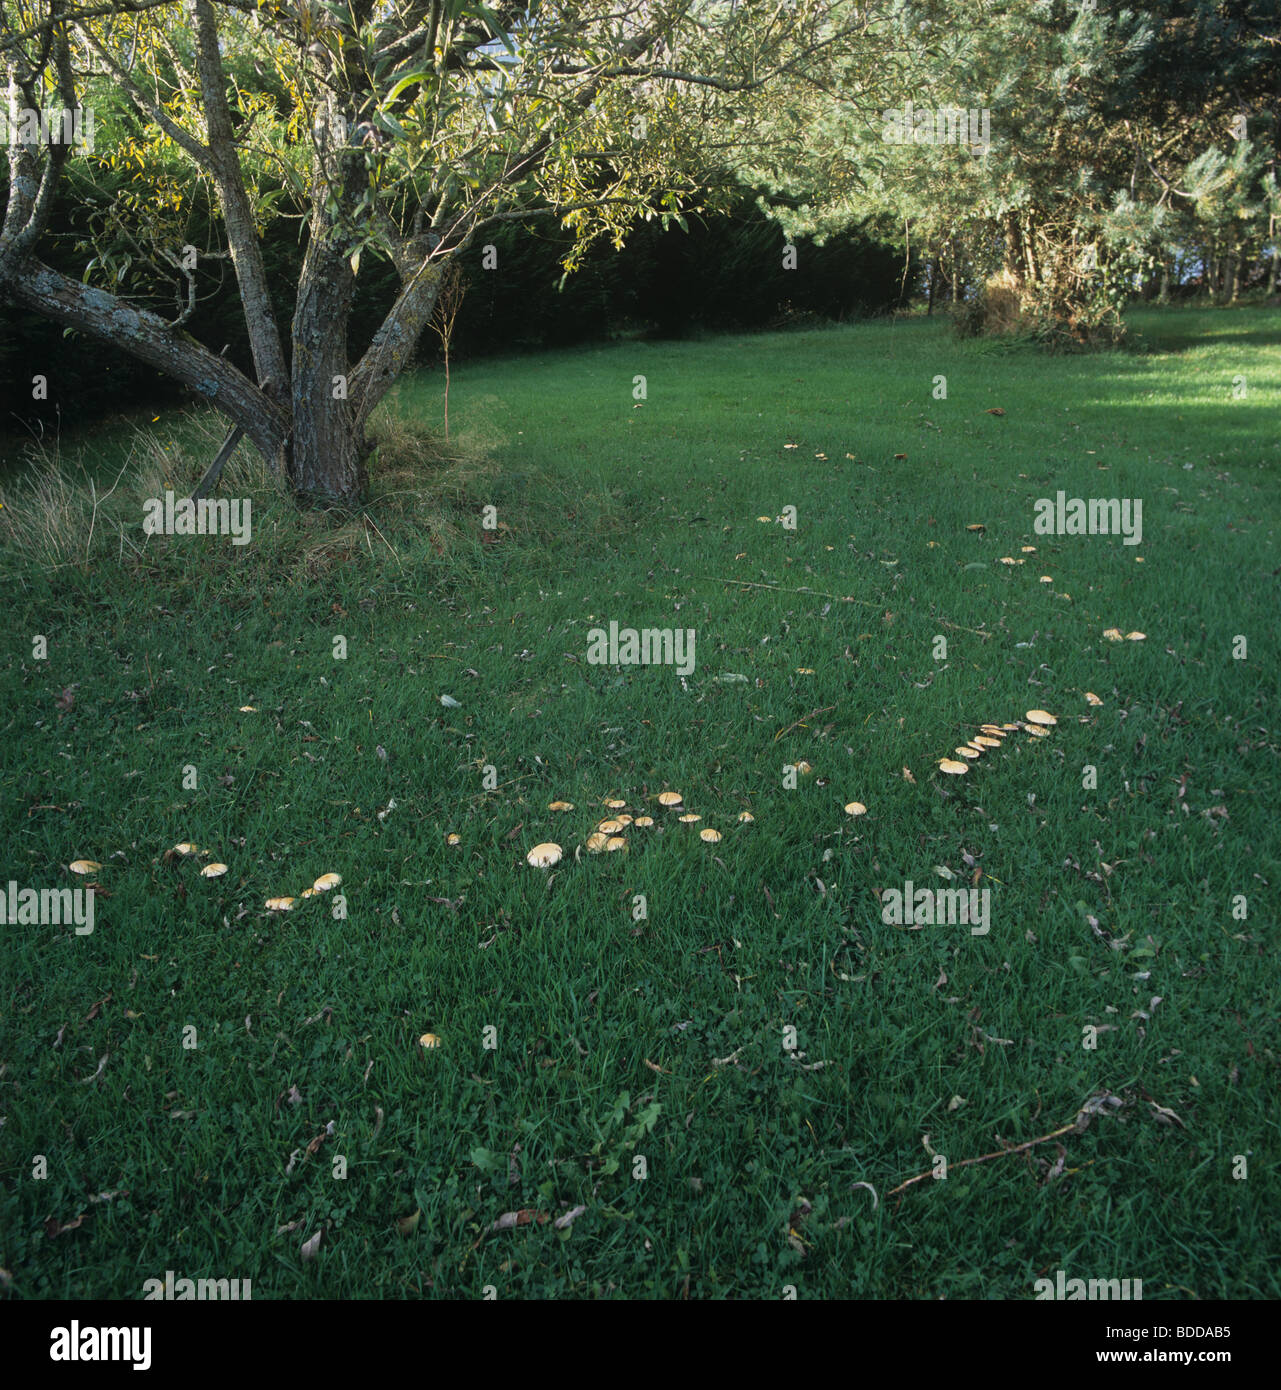 Fairy ring champignon fruiting bodies (Marasmius oreades) in a lawn around established willow tree Stock Photo